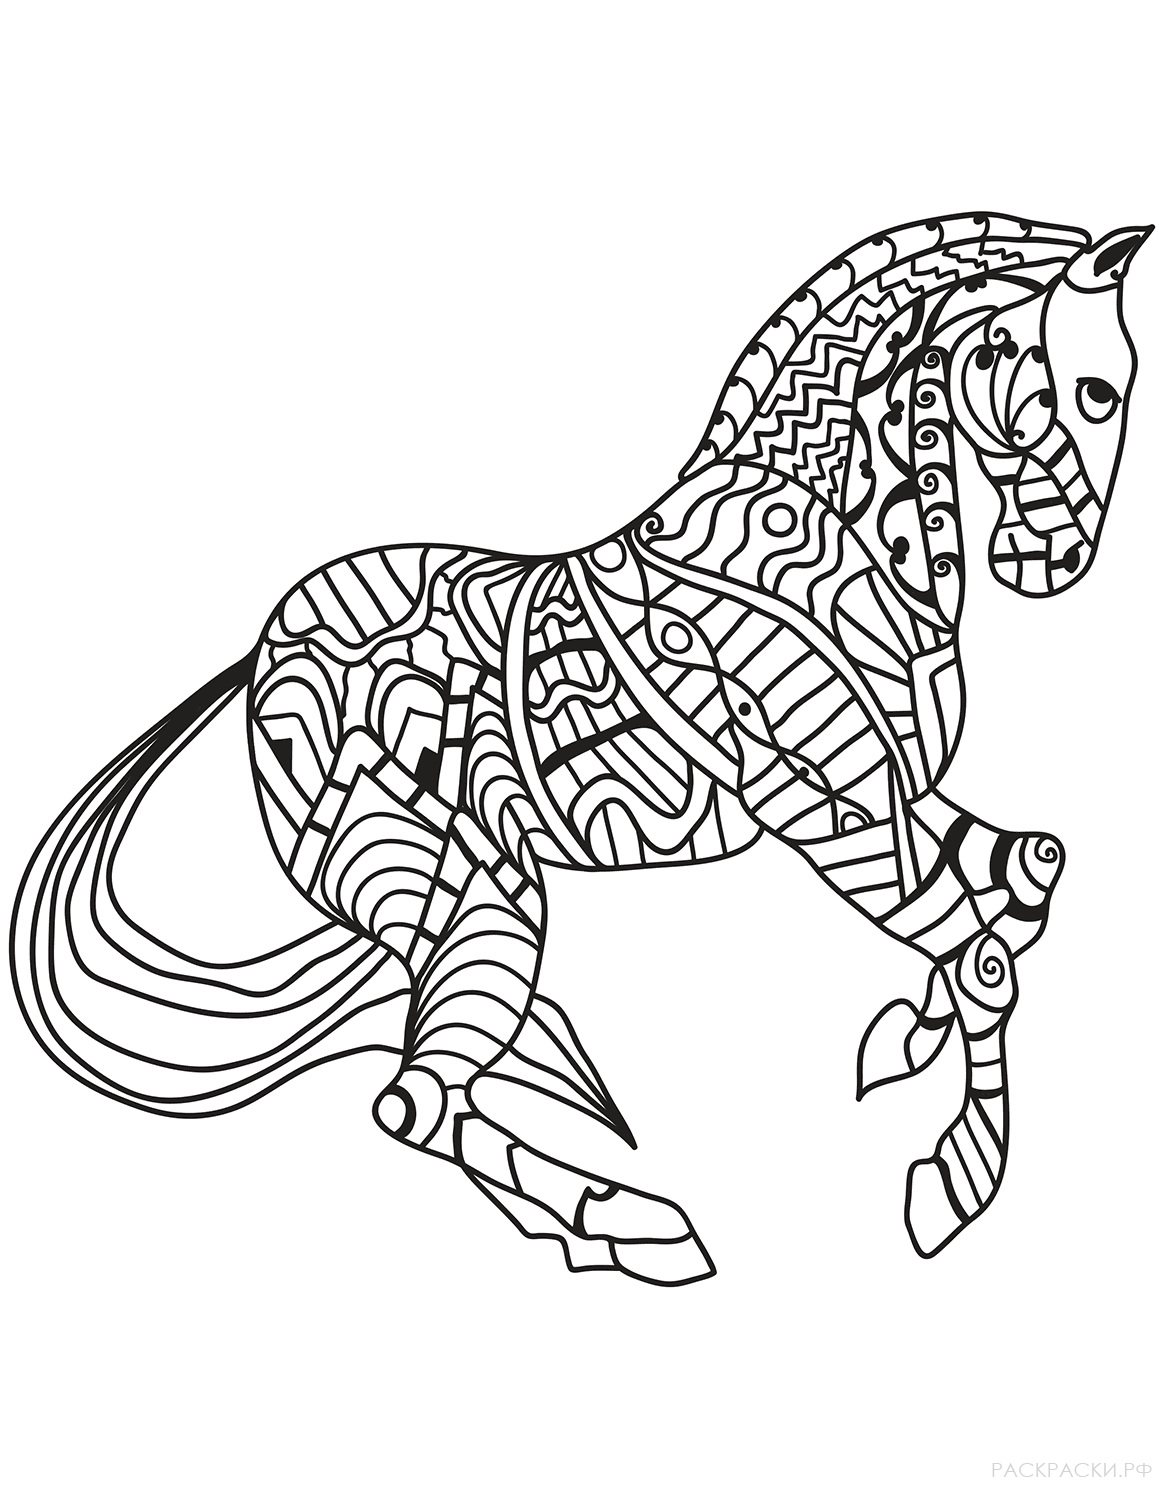 Раскраска Лошадь, бегущая рысью, в технике дзентангл